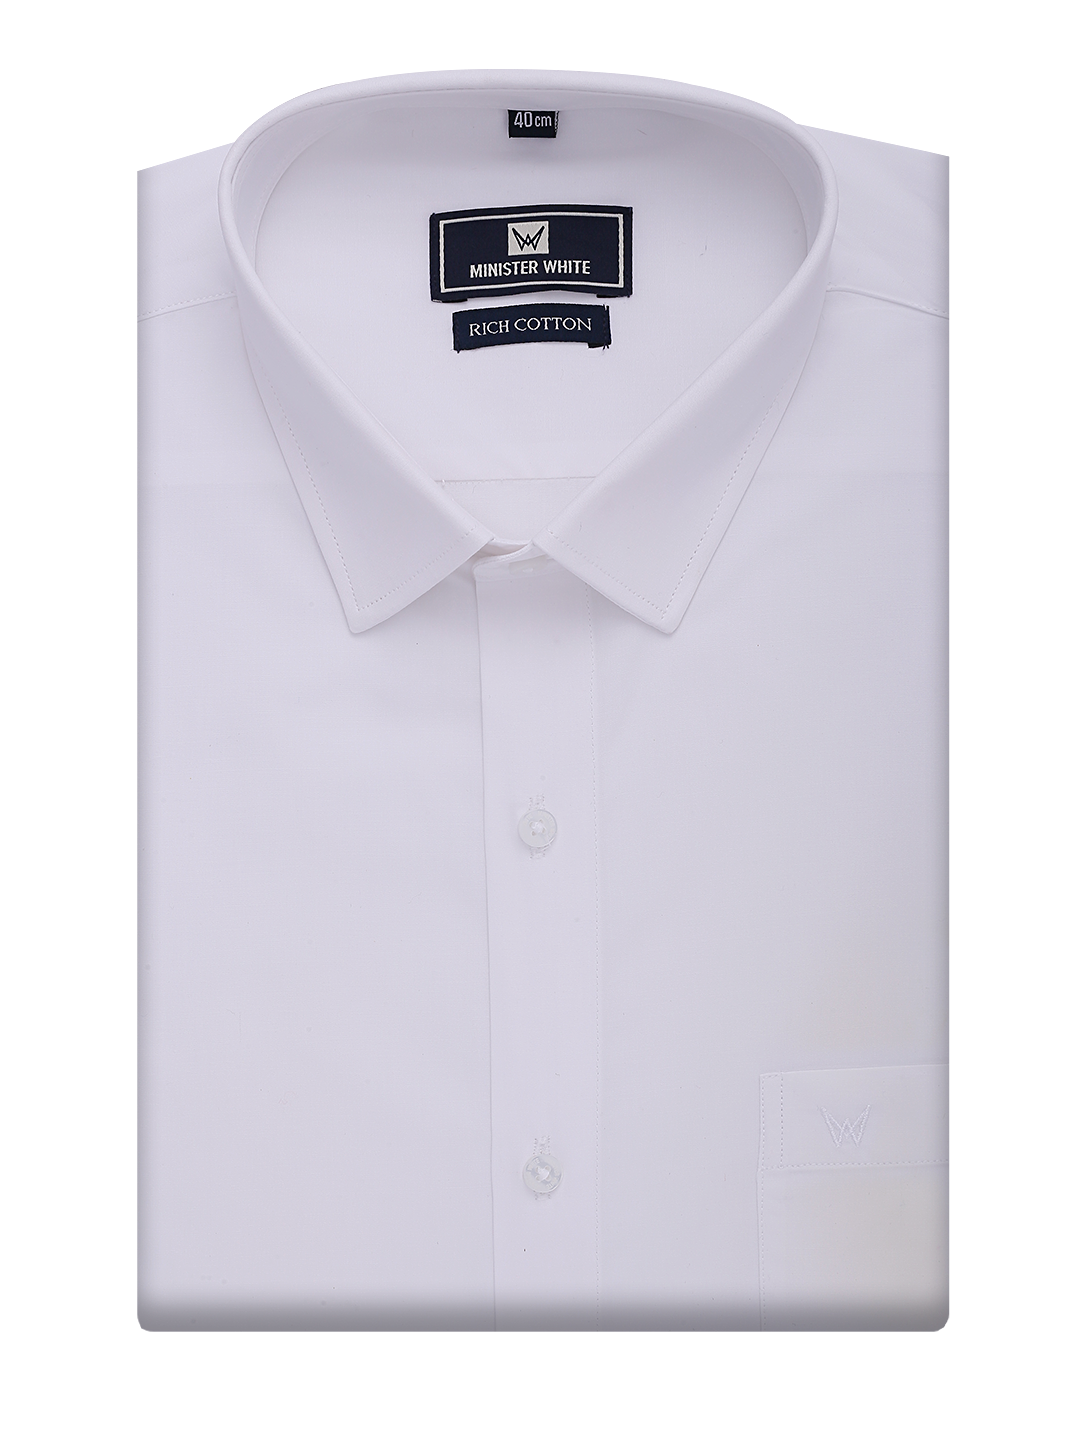 Rich Cotton White Shirt.Regular Fit - Liberty Cut